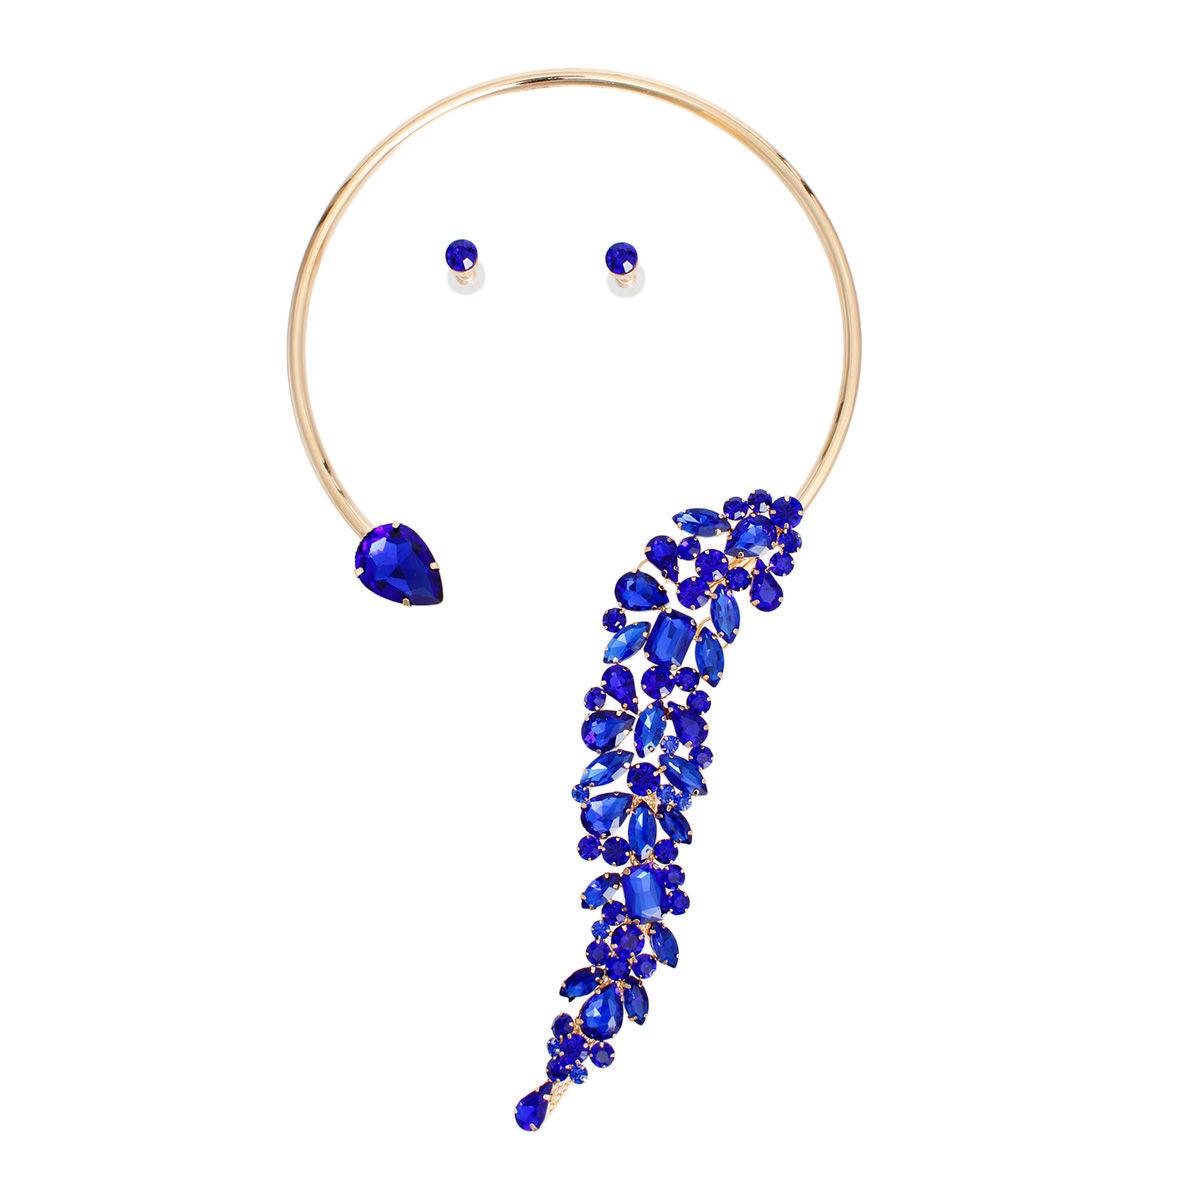 Shine Bright: Royal Blue Rhinestone Leaf Choker Necklace Set - Must-Have Accessory!